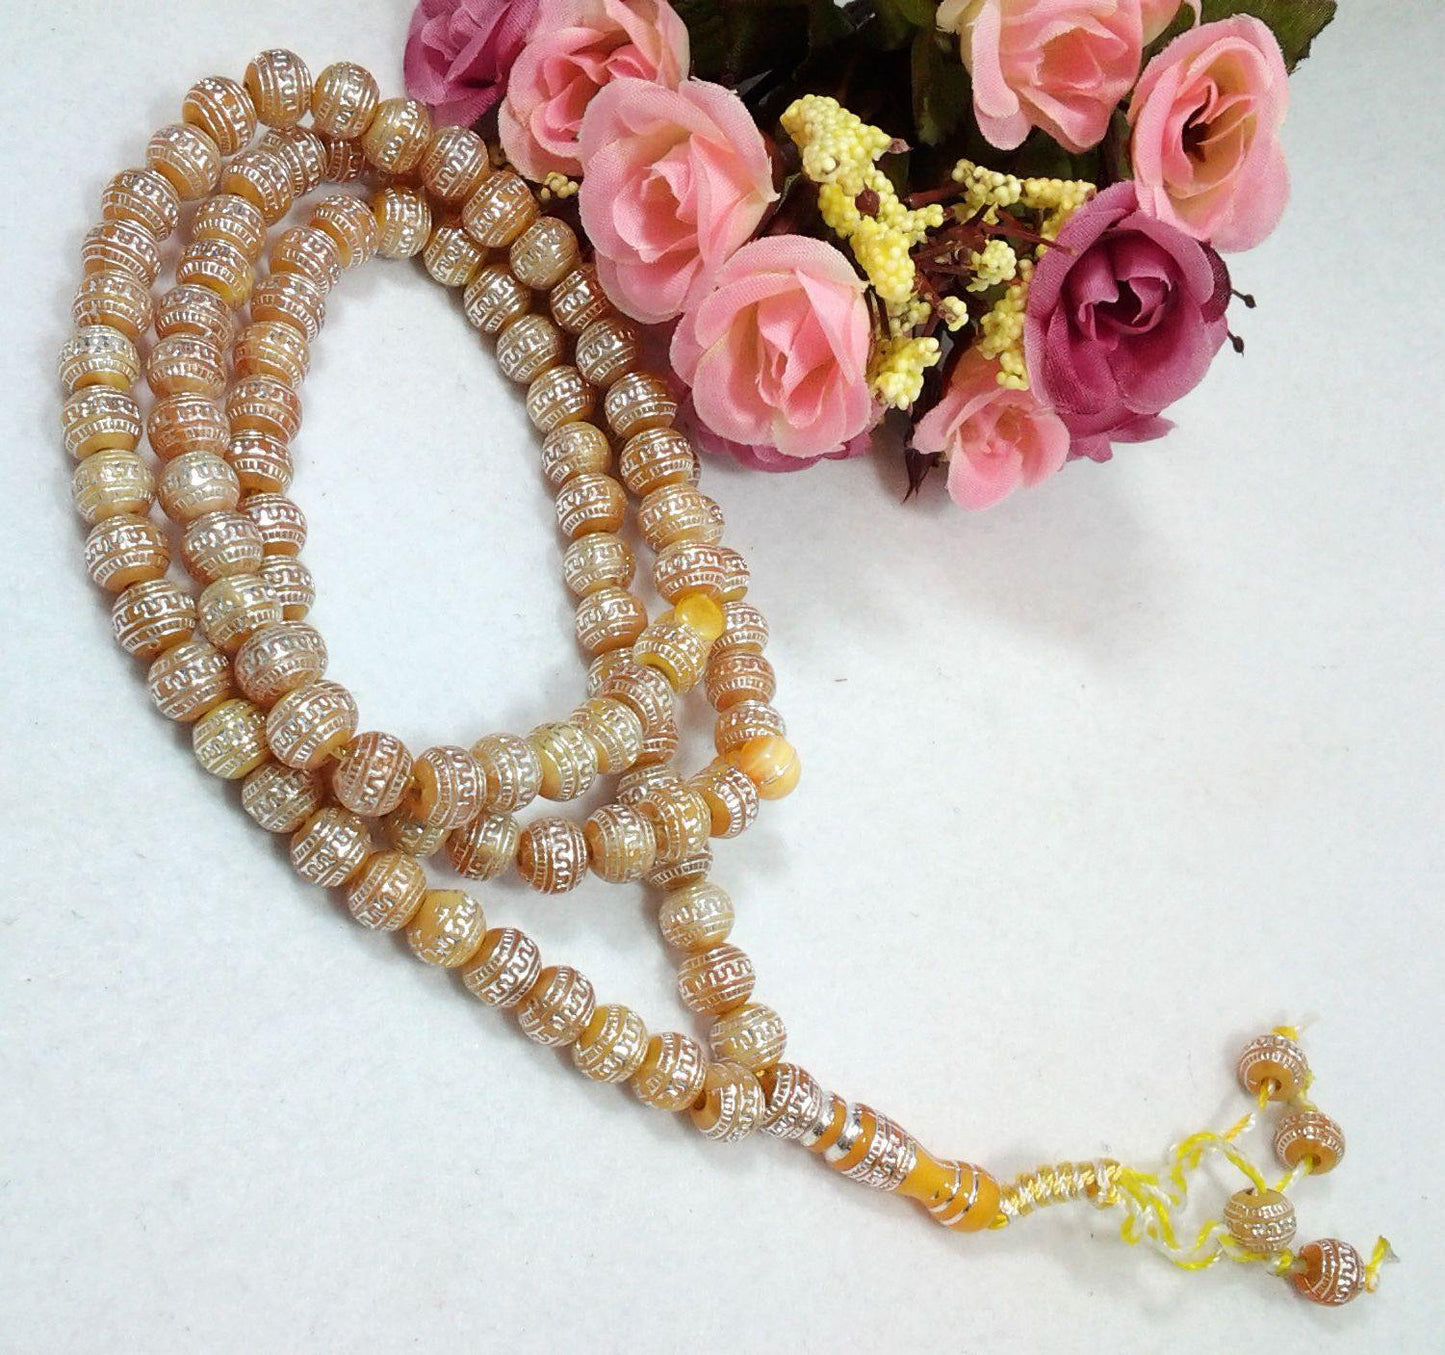 8mm Prayer Beads 99 Misbaha Tasbih Tasbeeh Islamic Salah Masbaha Thikr Allah - Islamic Shop